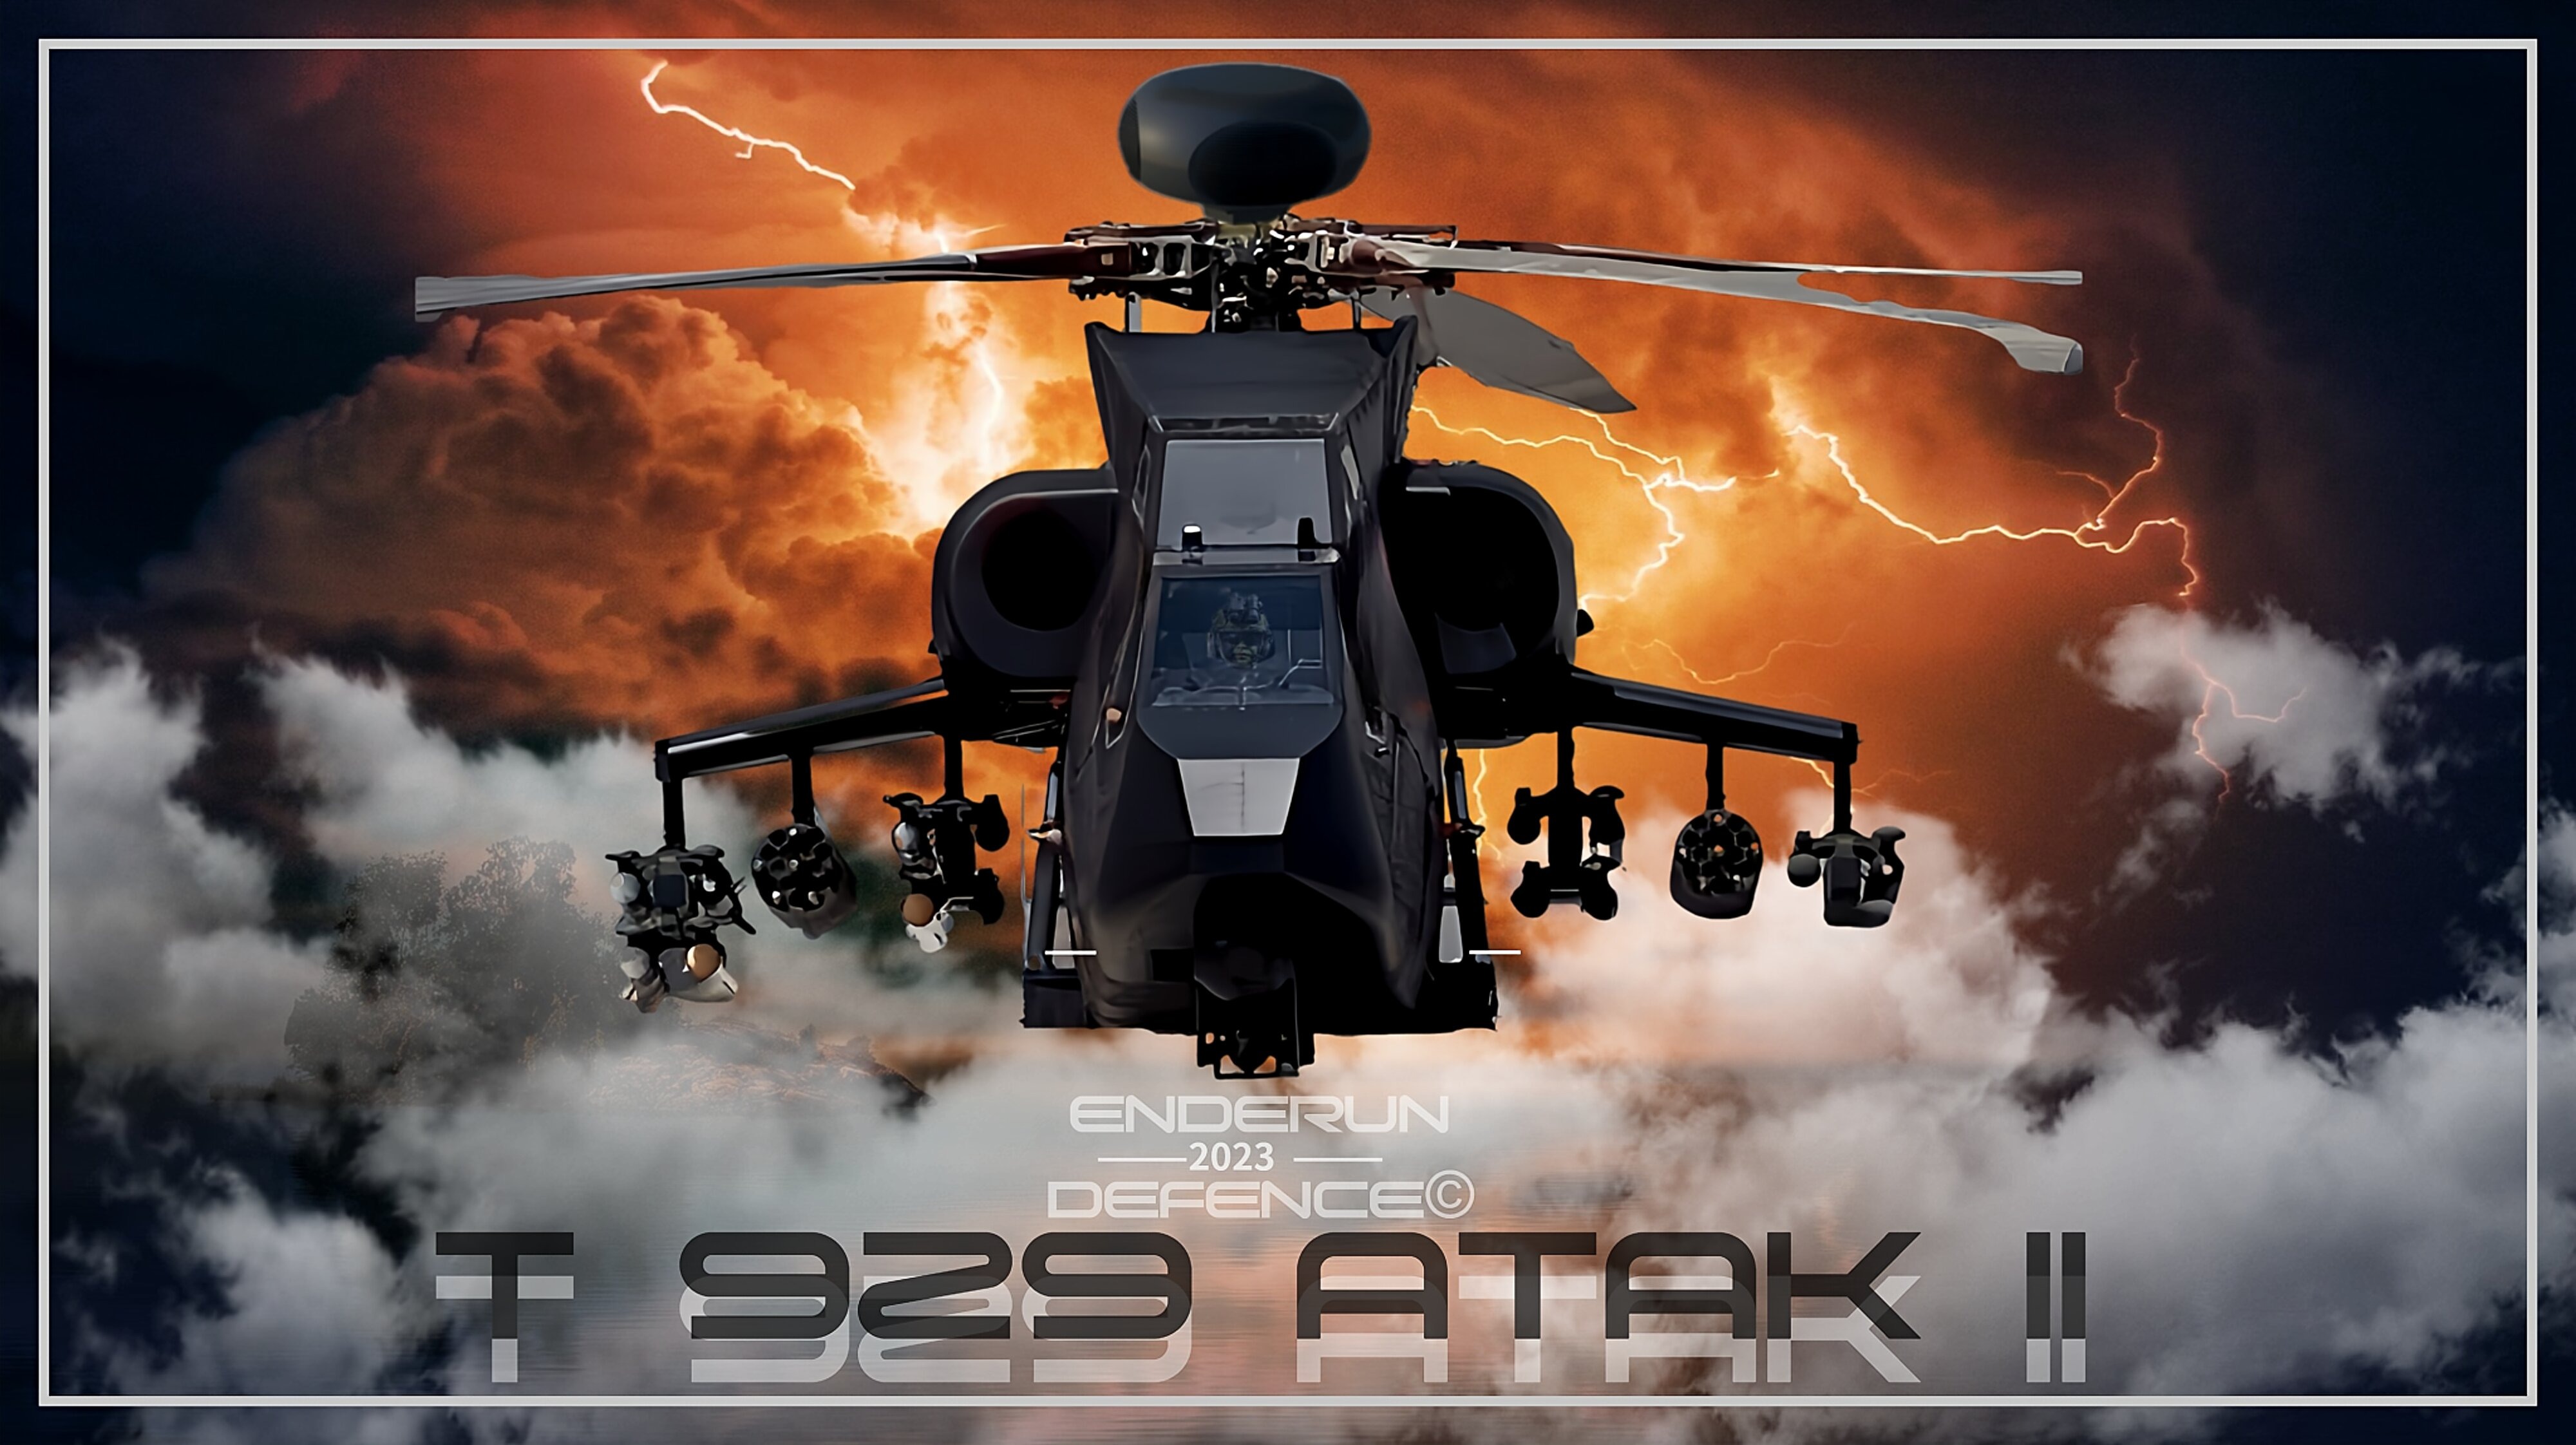 ENDERUN DEFENCE© T929 ATAK II ATES ve BULUT PROJEKT 07-05-2023-2.jpg